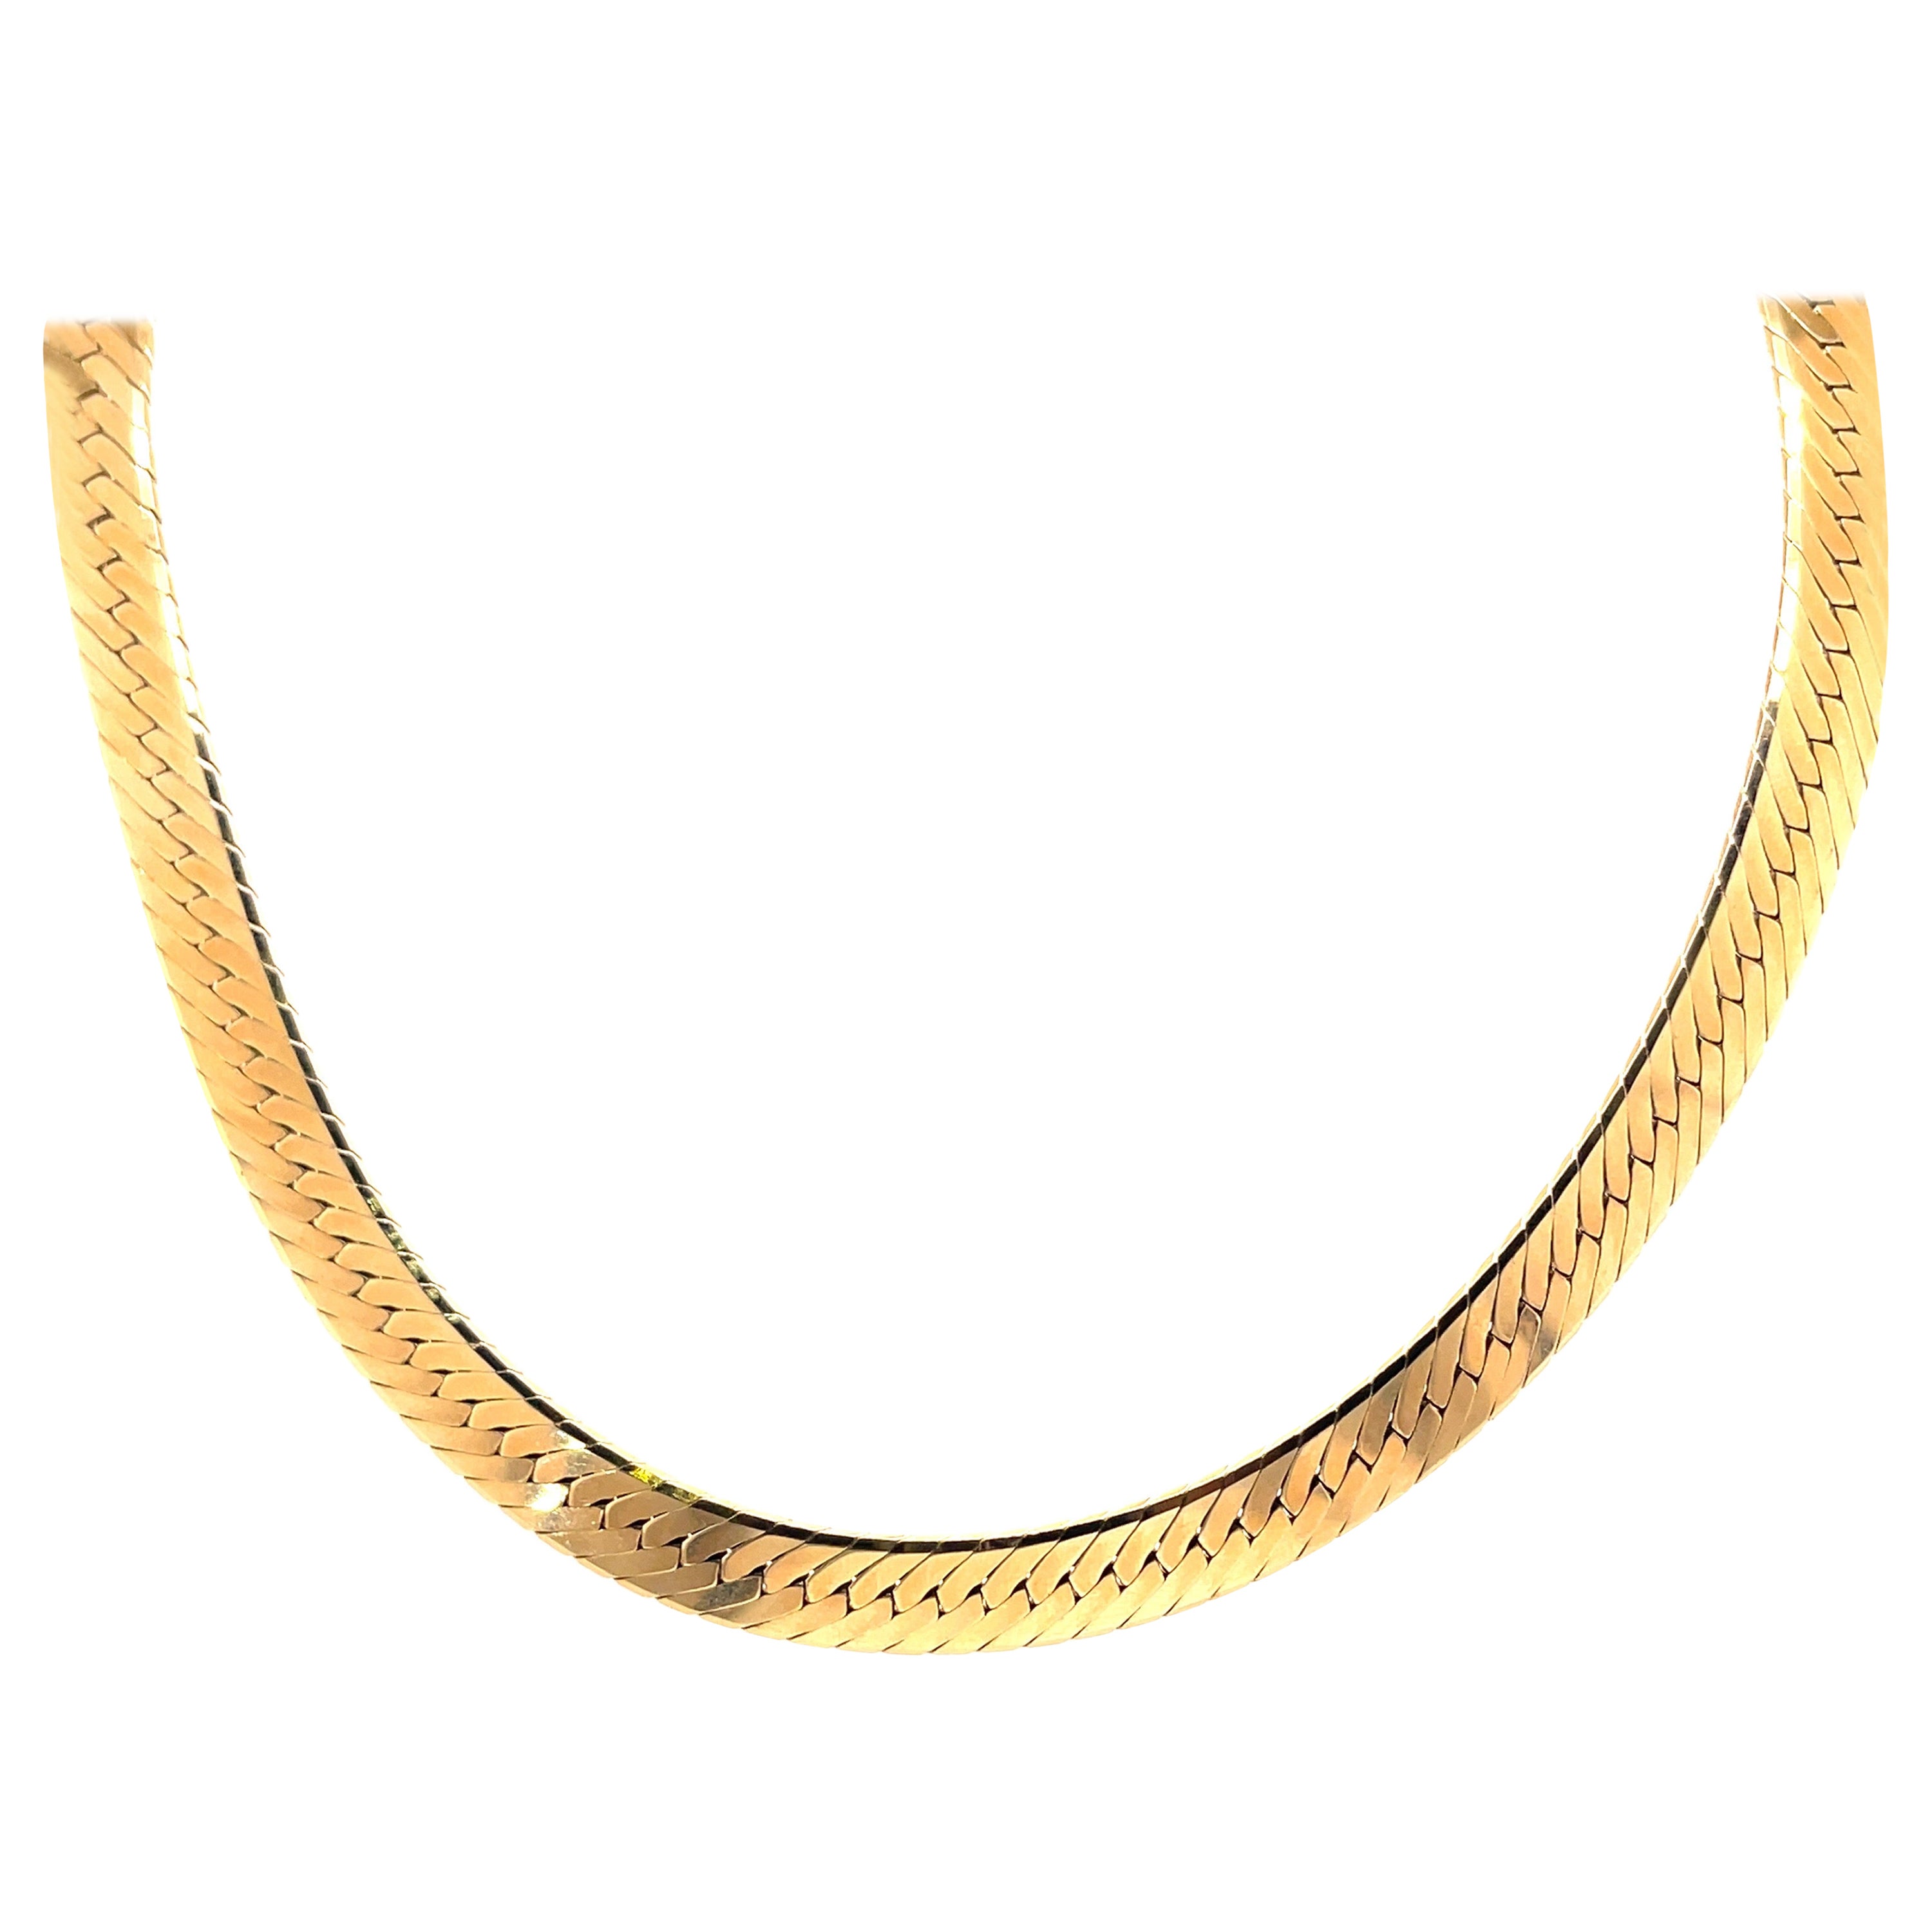 Vintage Gold Herringbone Chain Necklace